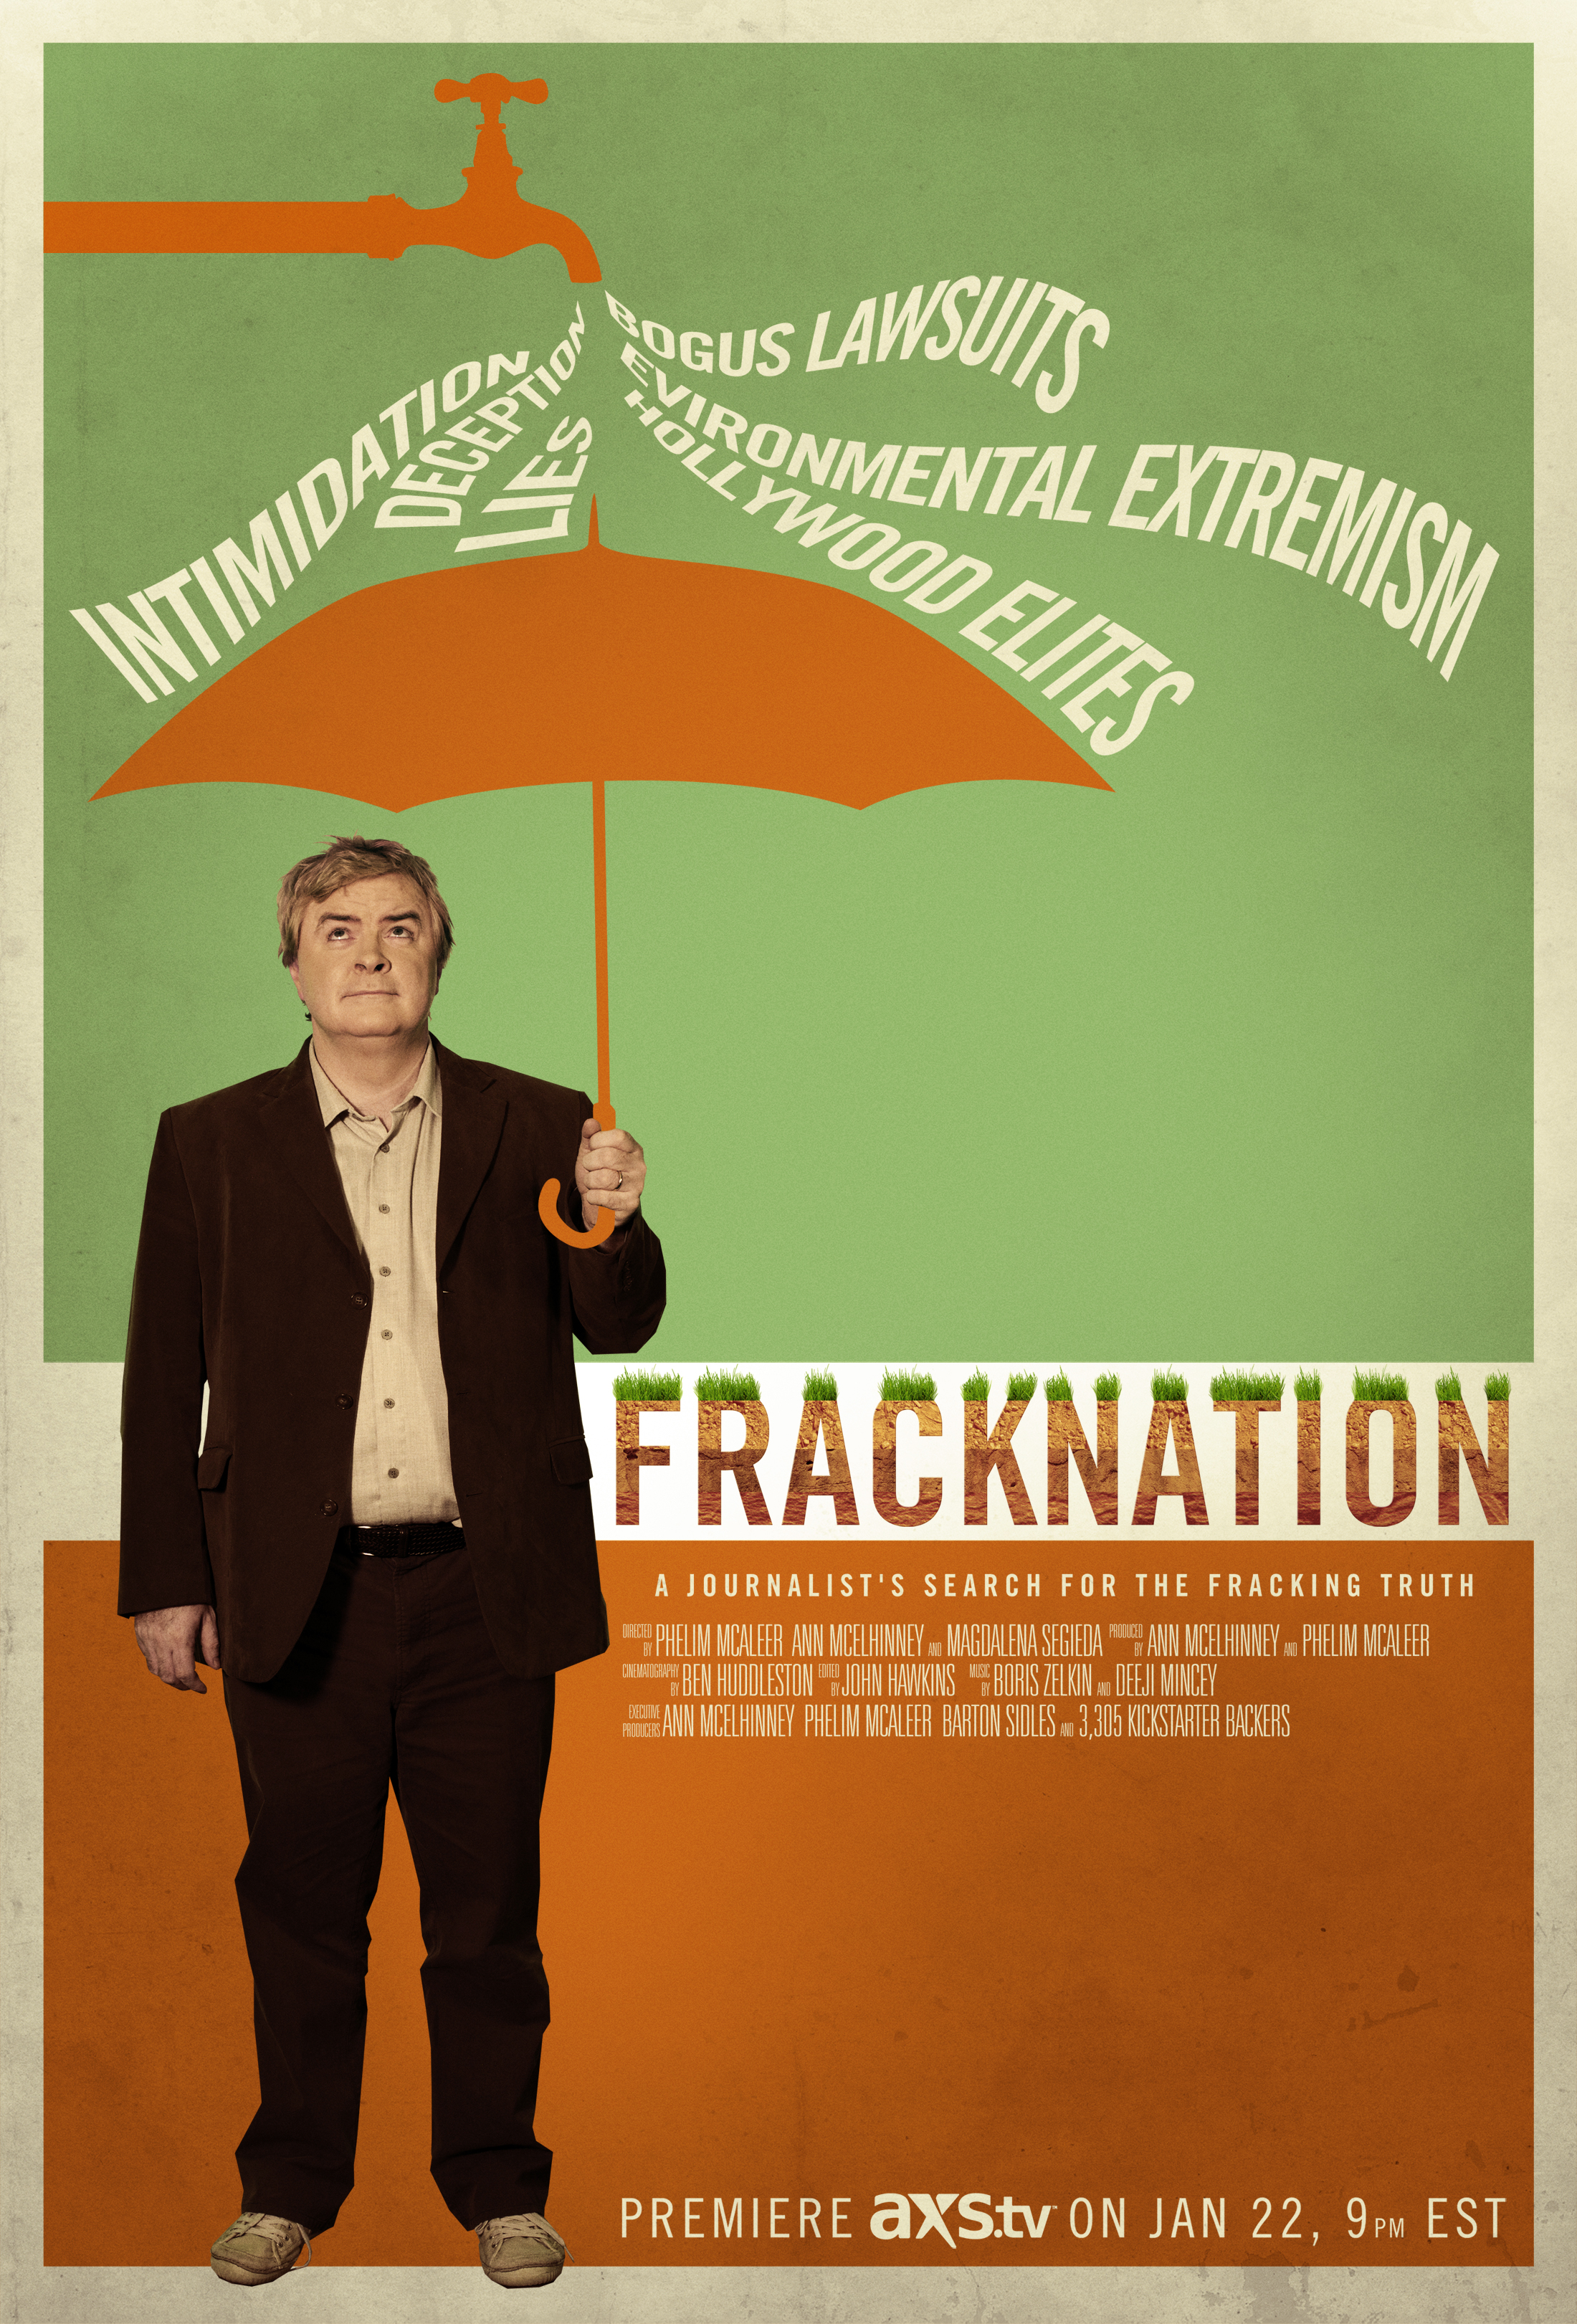 FrackNation: A Journalist's Search for the Fracking Truth